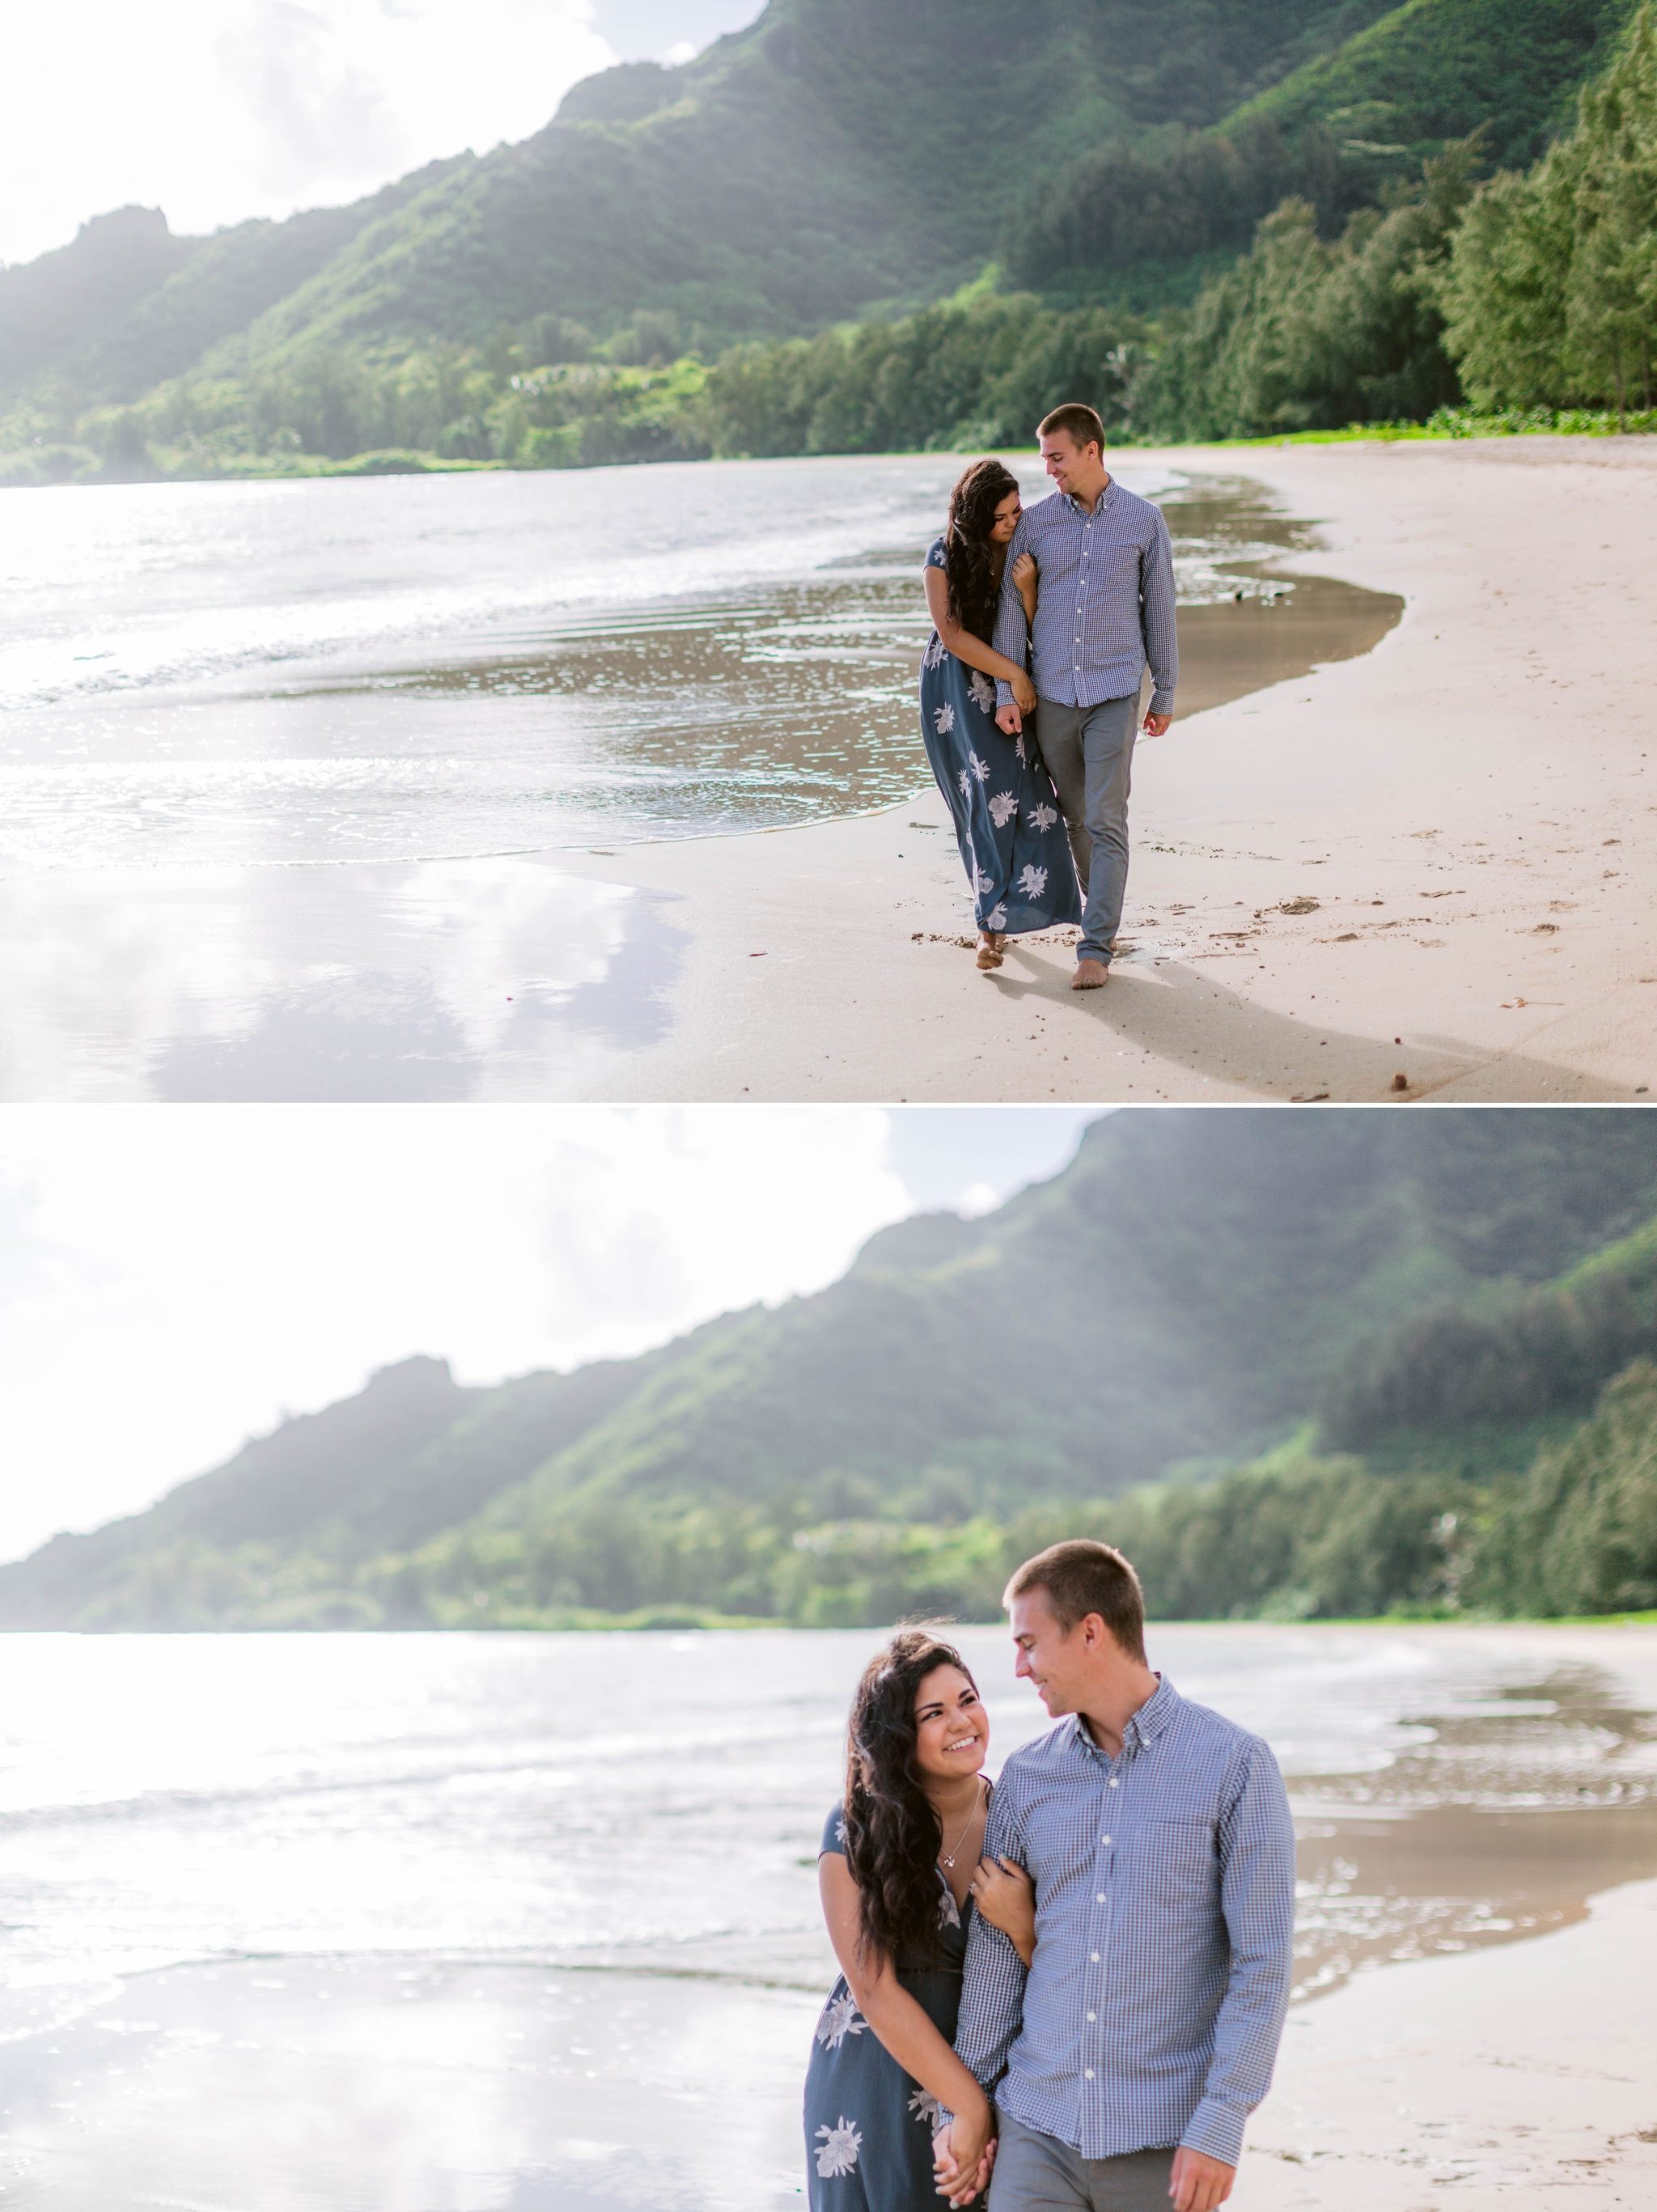  Couple Walking on the beach - Rilee + Max - Beach Engagement Session at Kahana Bay in Kaaawa, HI - Oahu Hawaii Wedding Photographer - #hawaiiengagementphotographer #oahuengagementphotographer 